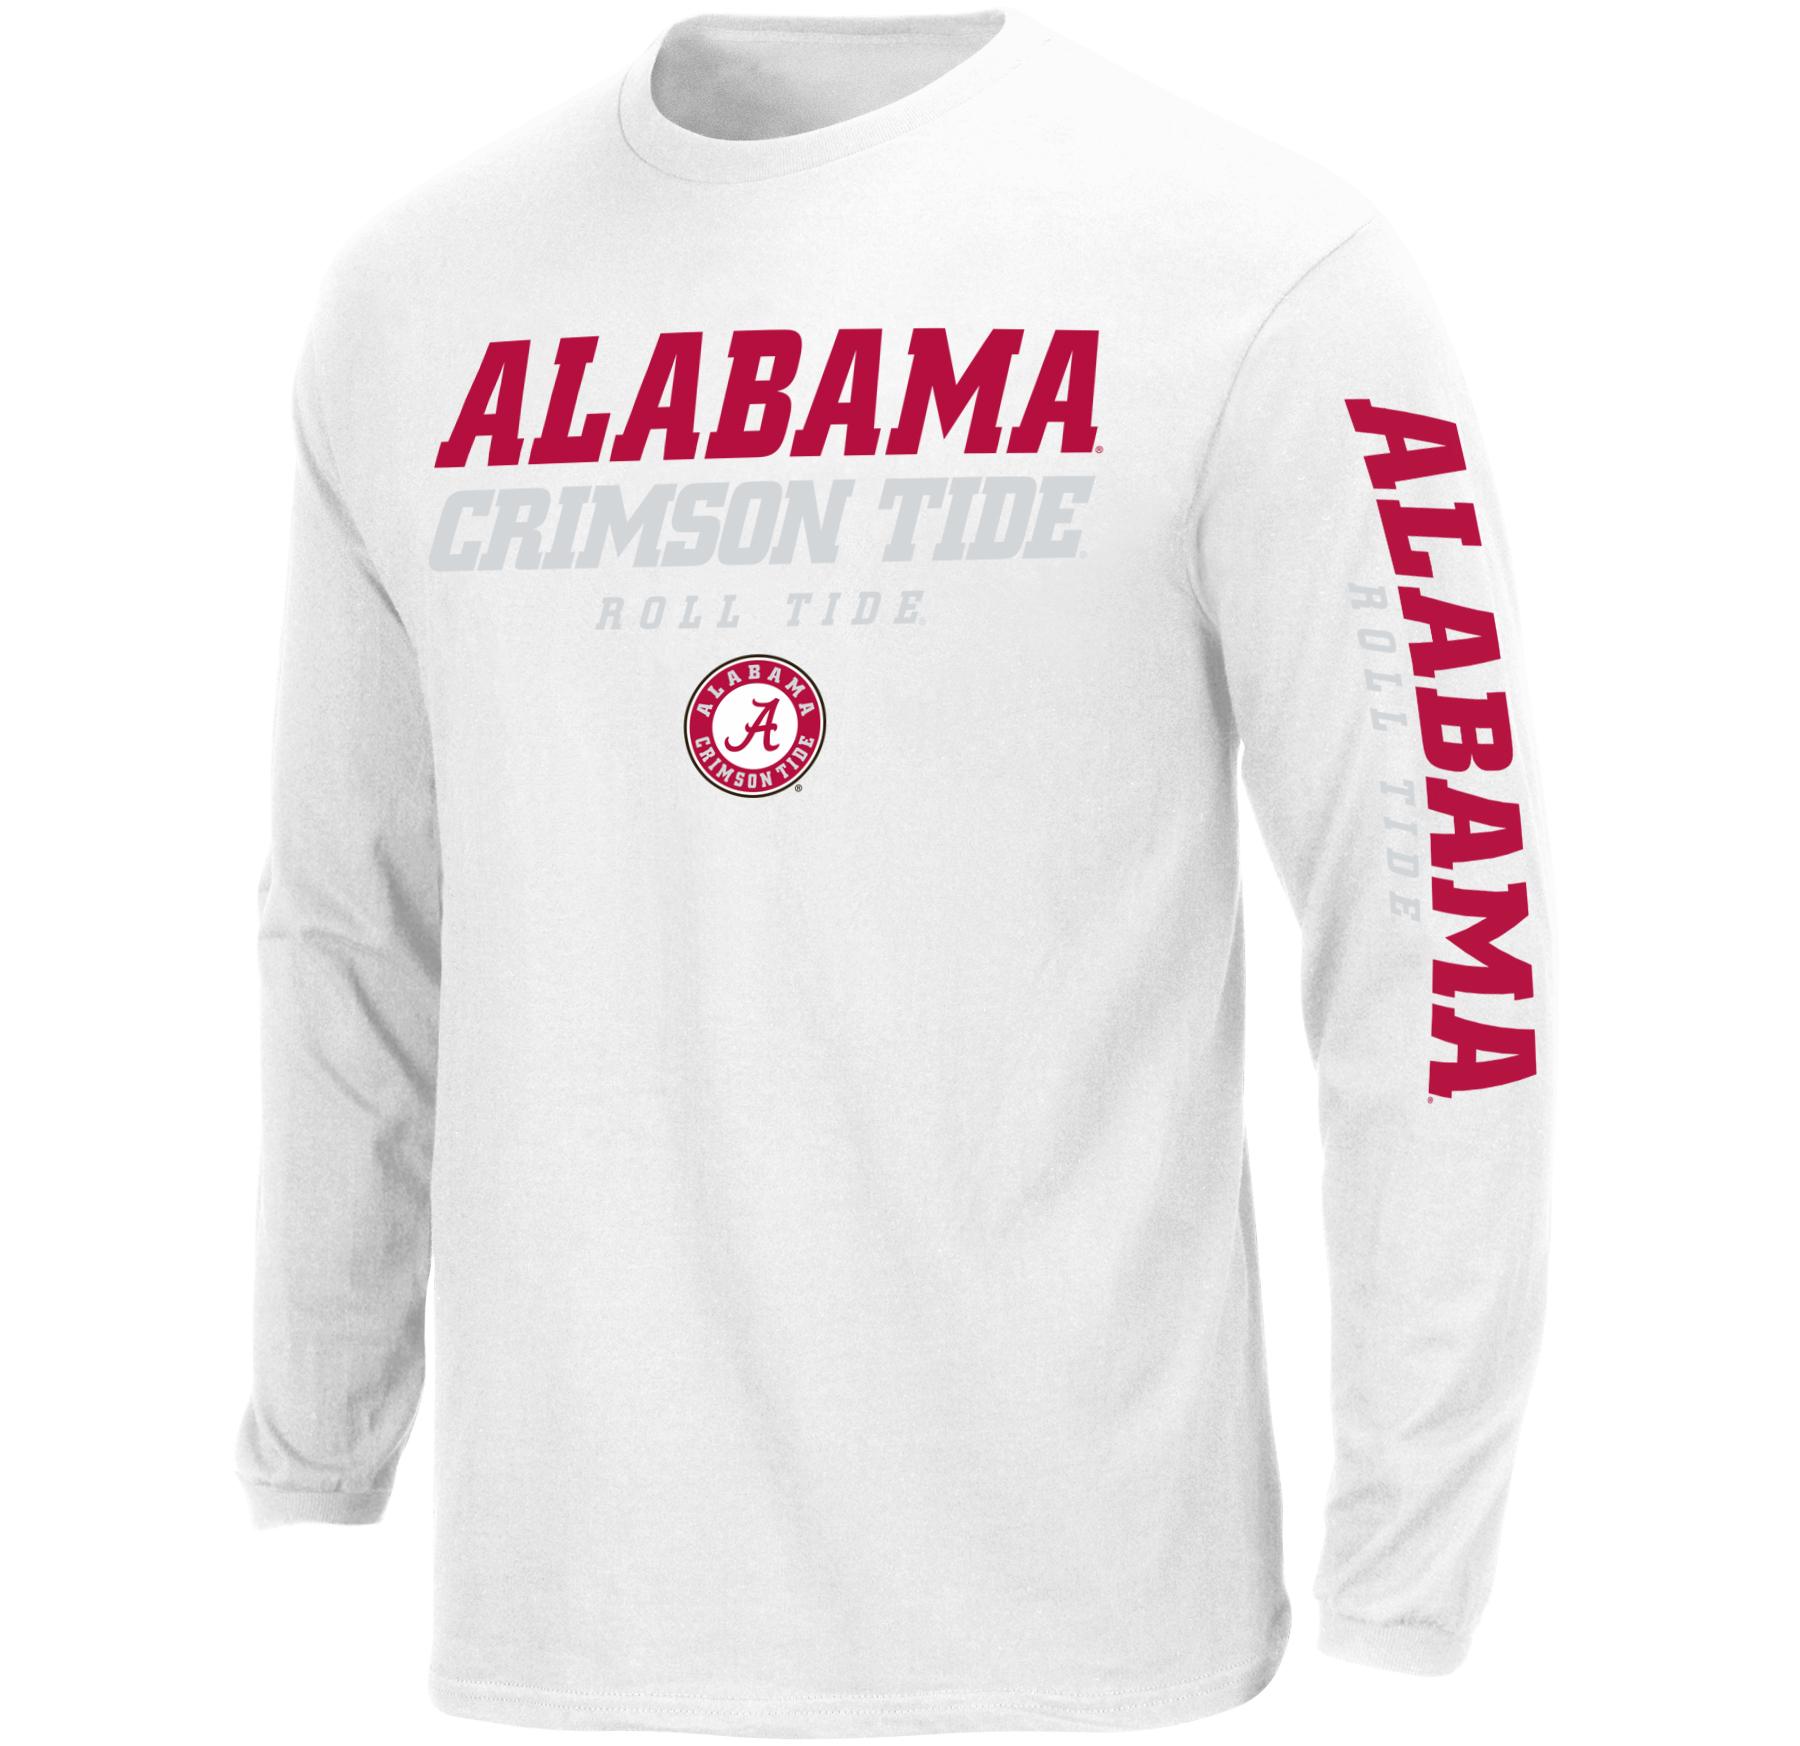 NCAA Men's Big & Tall Long-Sleeve T-Shirt - Alabama Crimson Tide